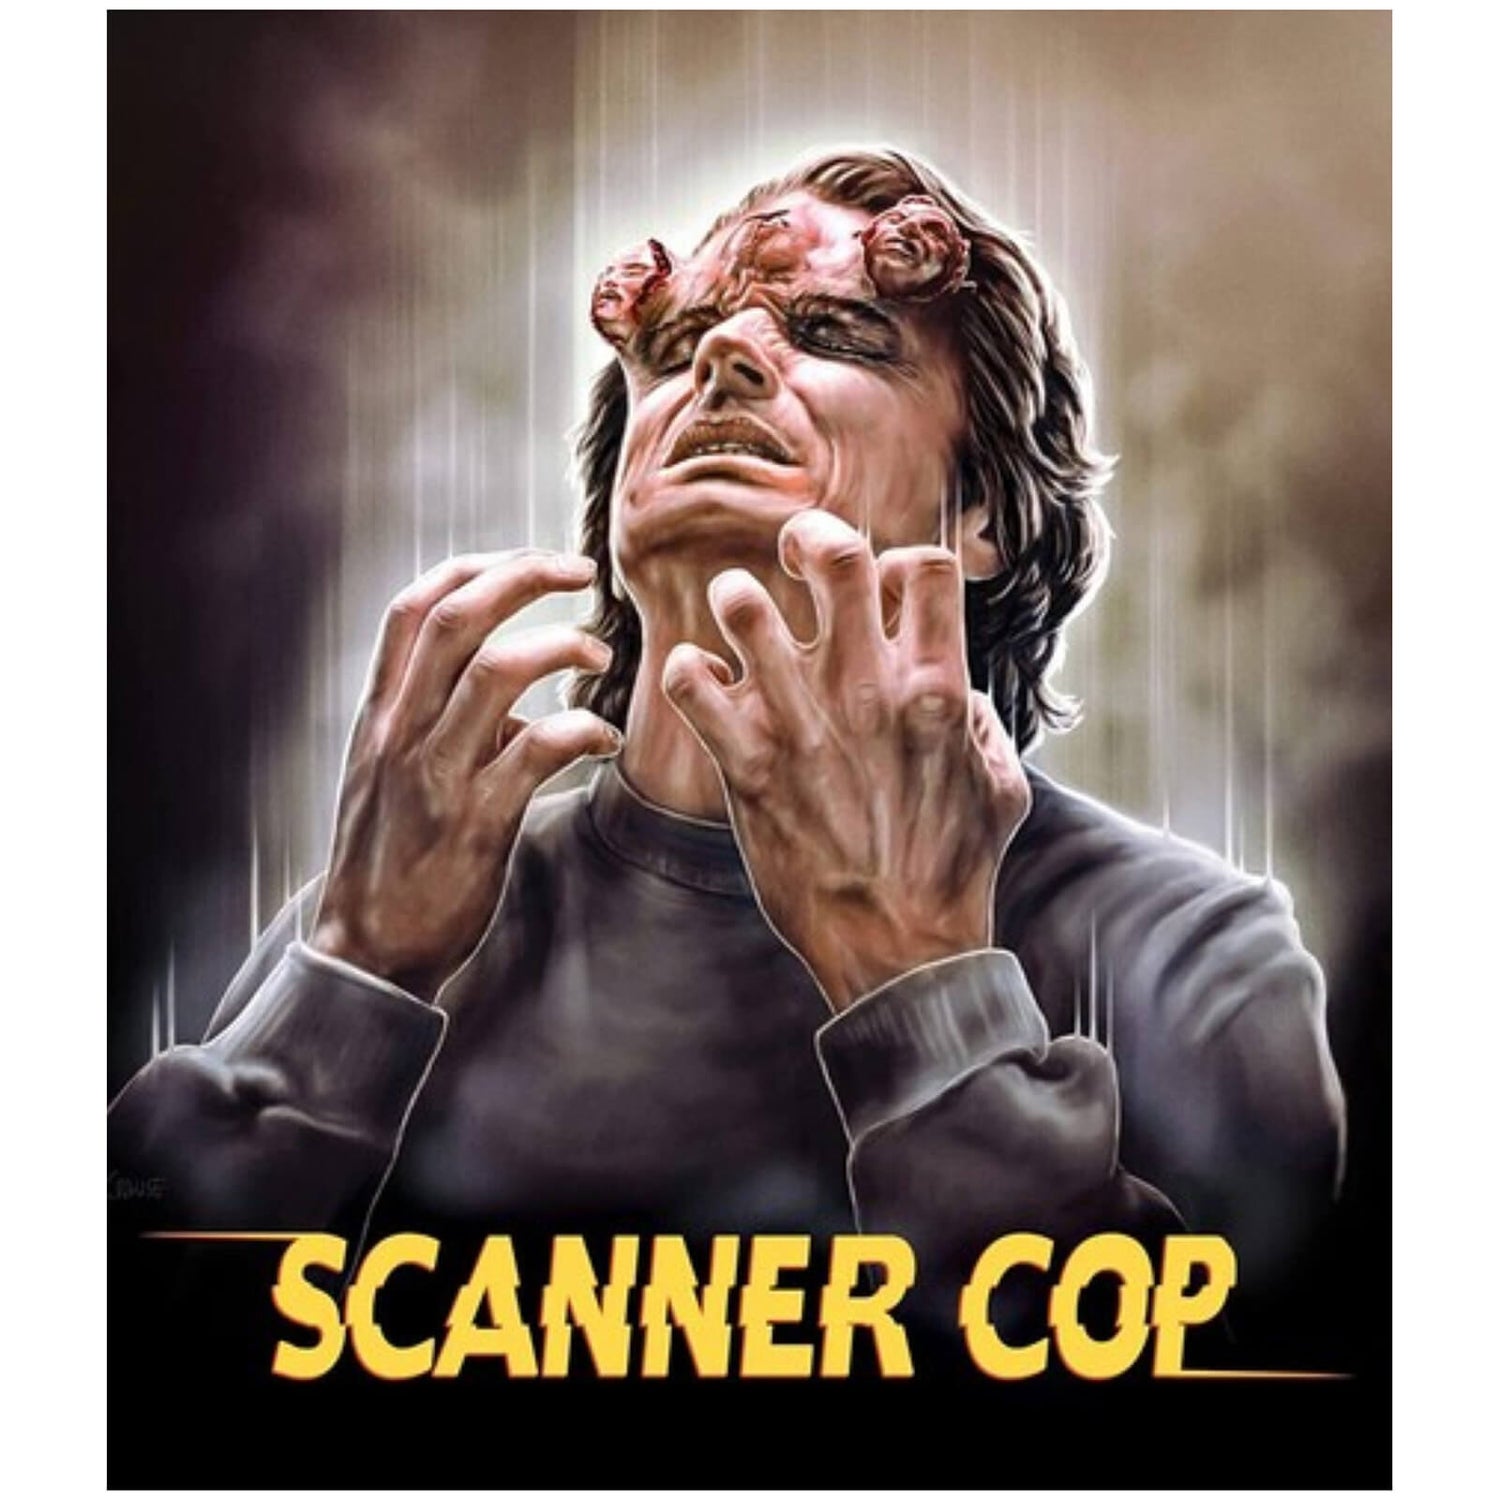 Scanner Cop - 4K Ultra HD (Includes Blu-ray)